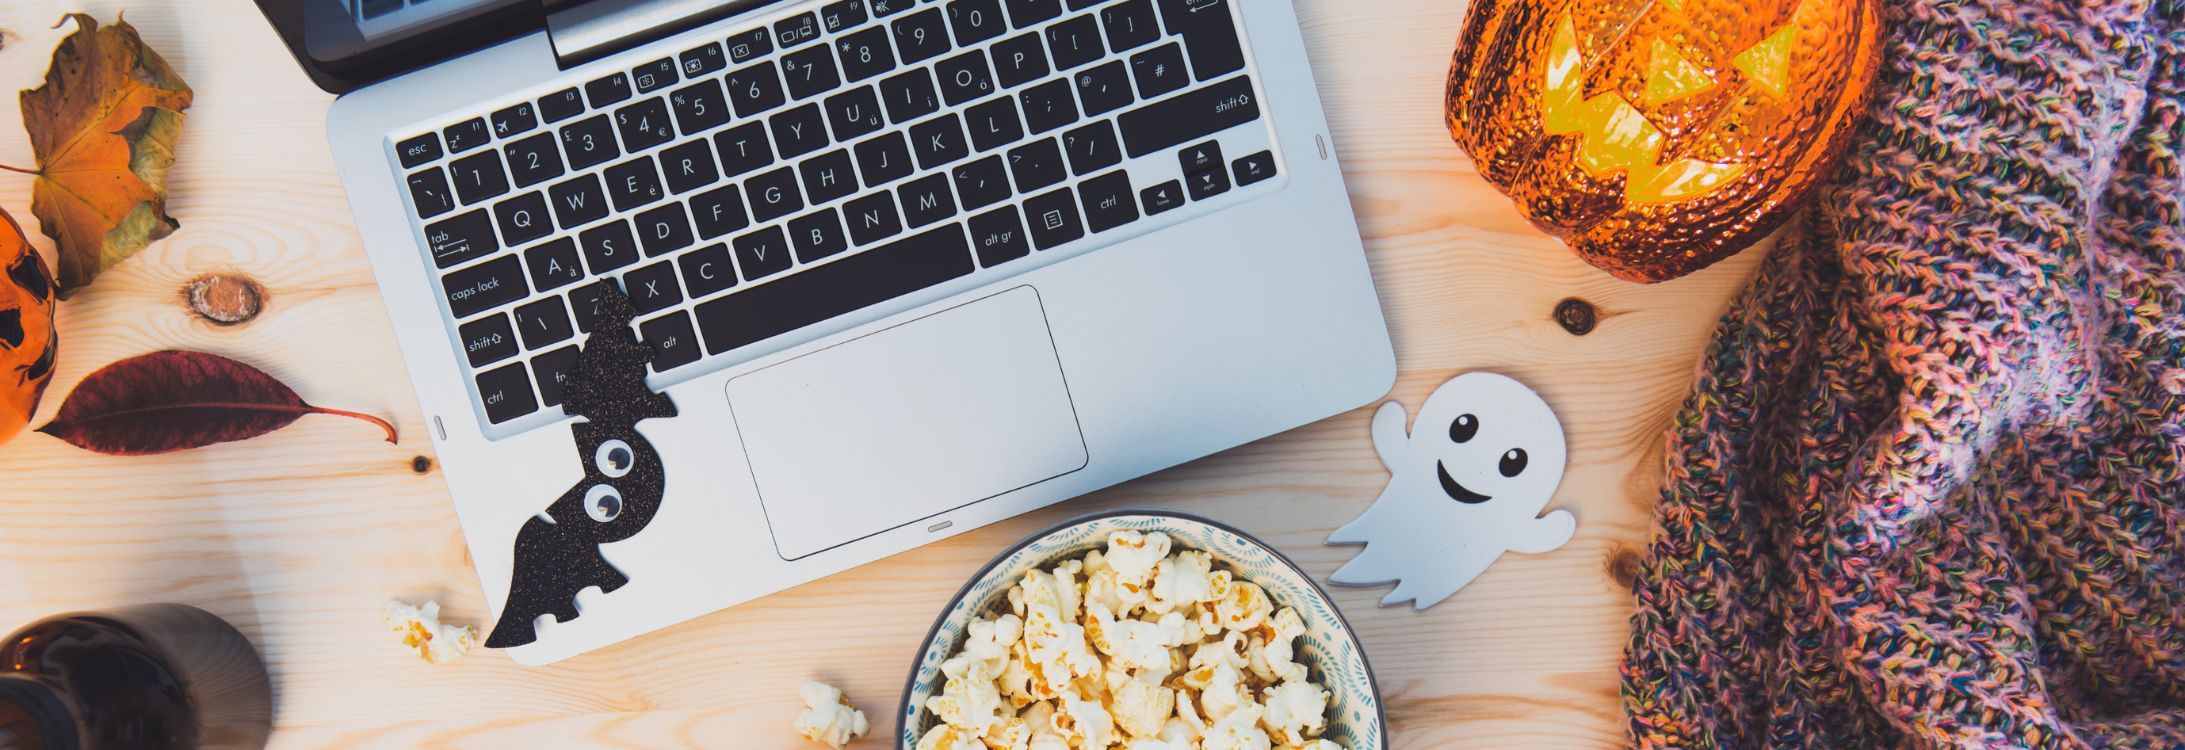 Laptop with Halloween themed decor & snacks - Halloween Movie Night Snacks blog cover